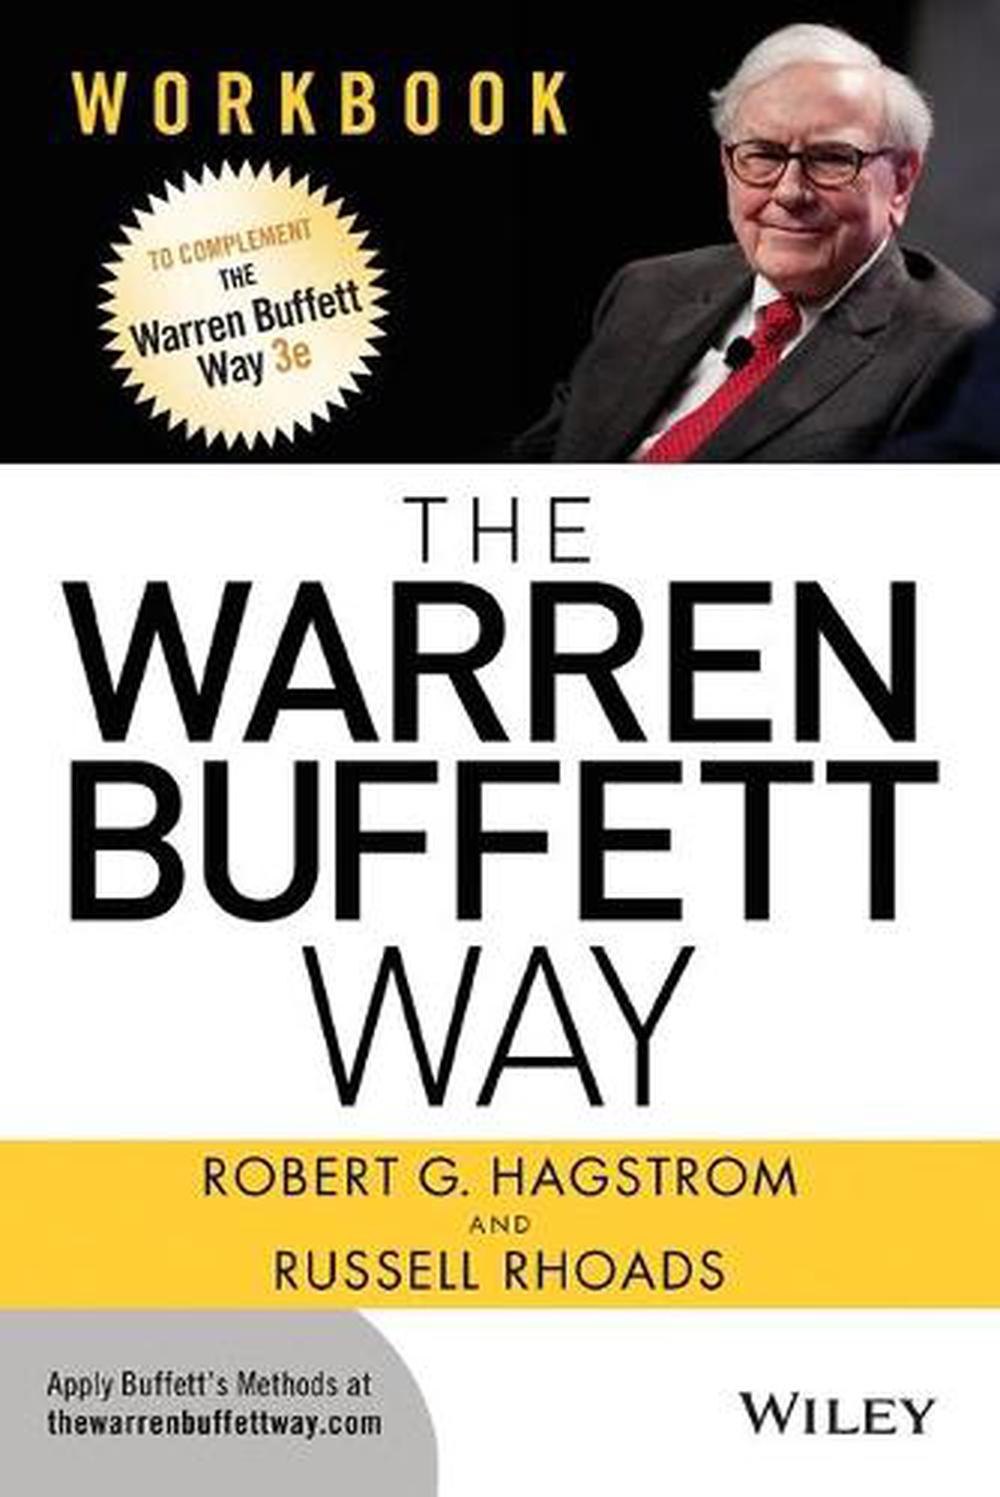 Robert　Nile　The　9781118574713　Way　online　G.　Workbook　at　Warren　Hagstrom,　The　Paperback,　Buy　Buffett　by